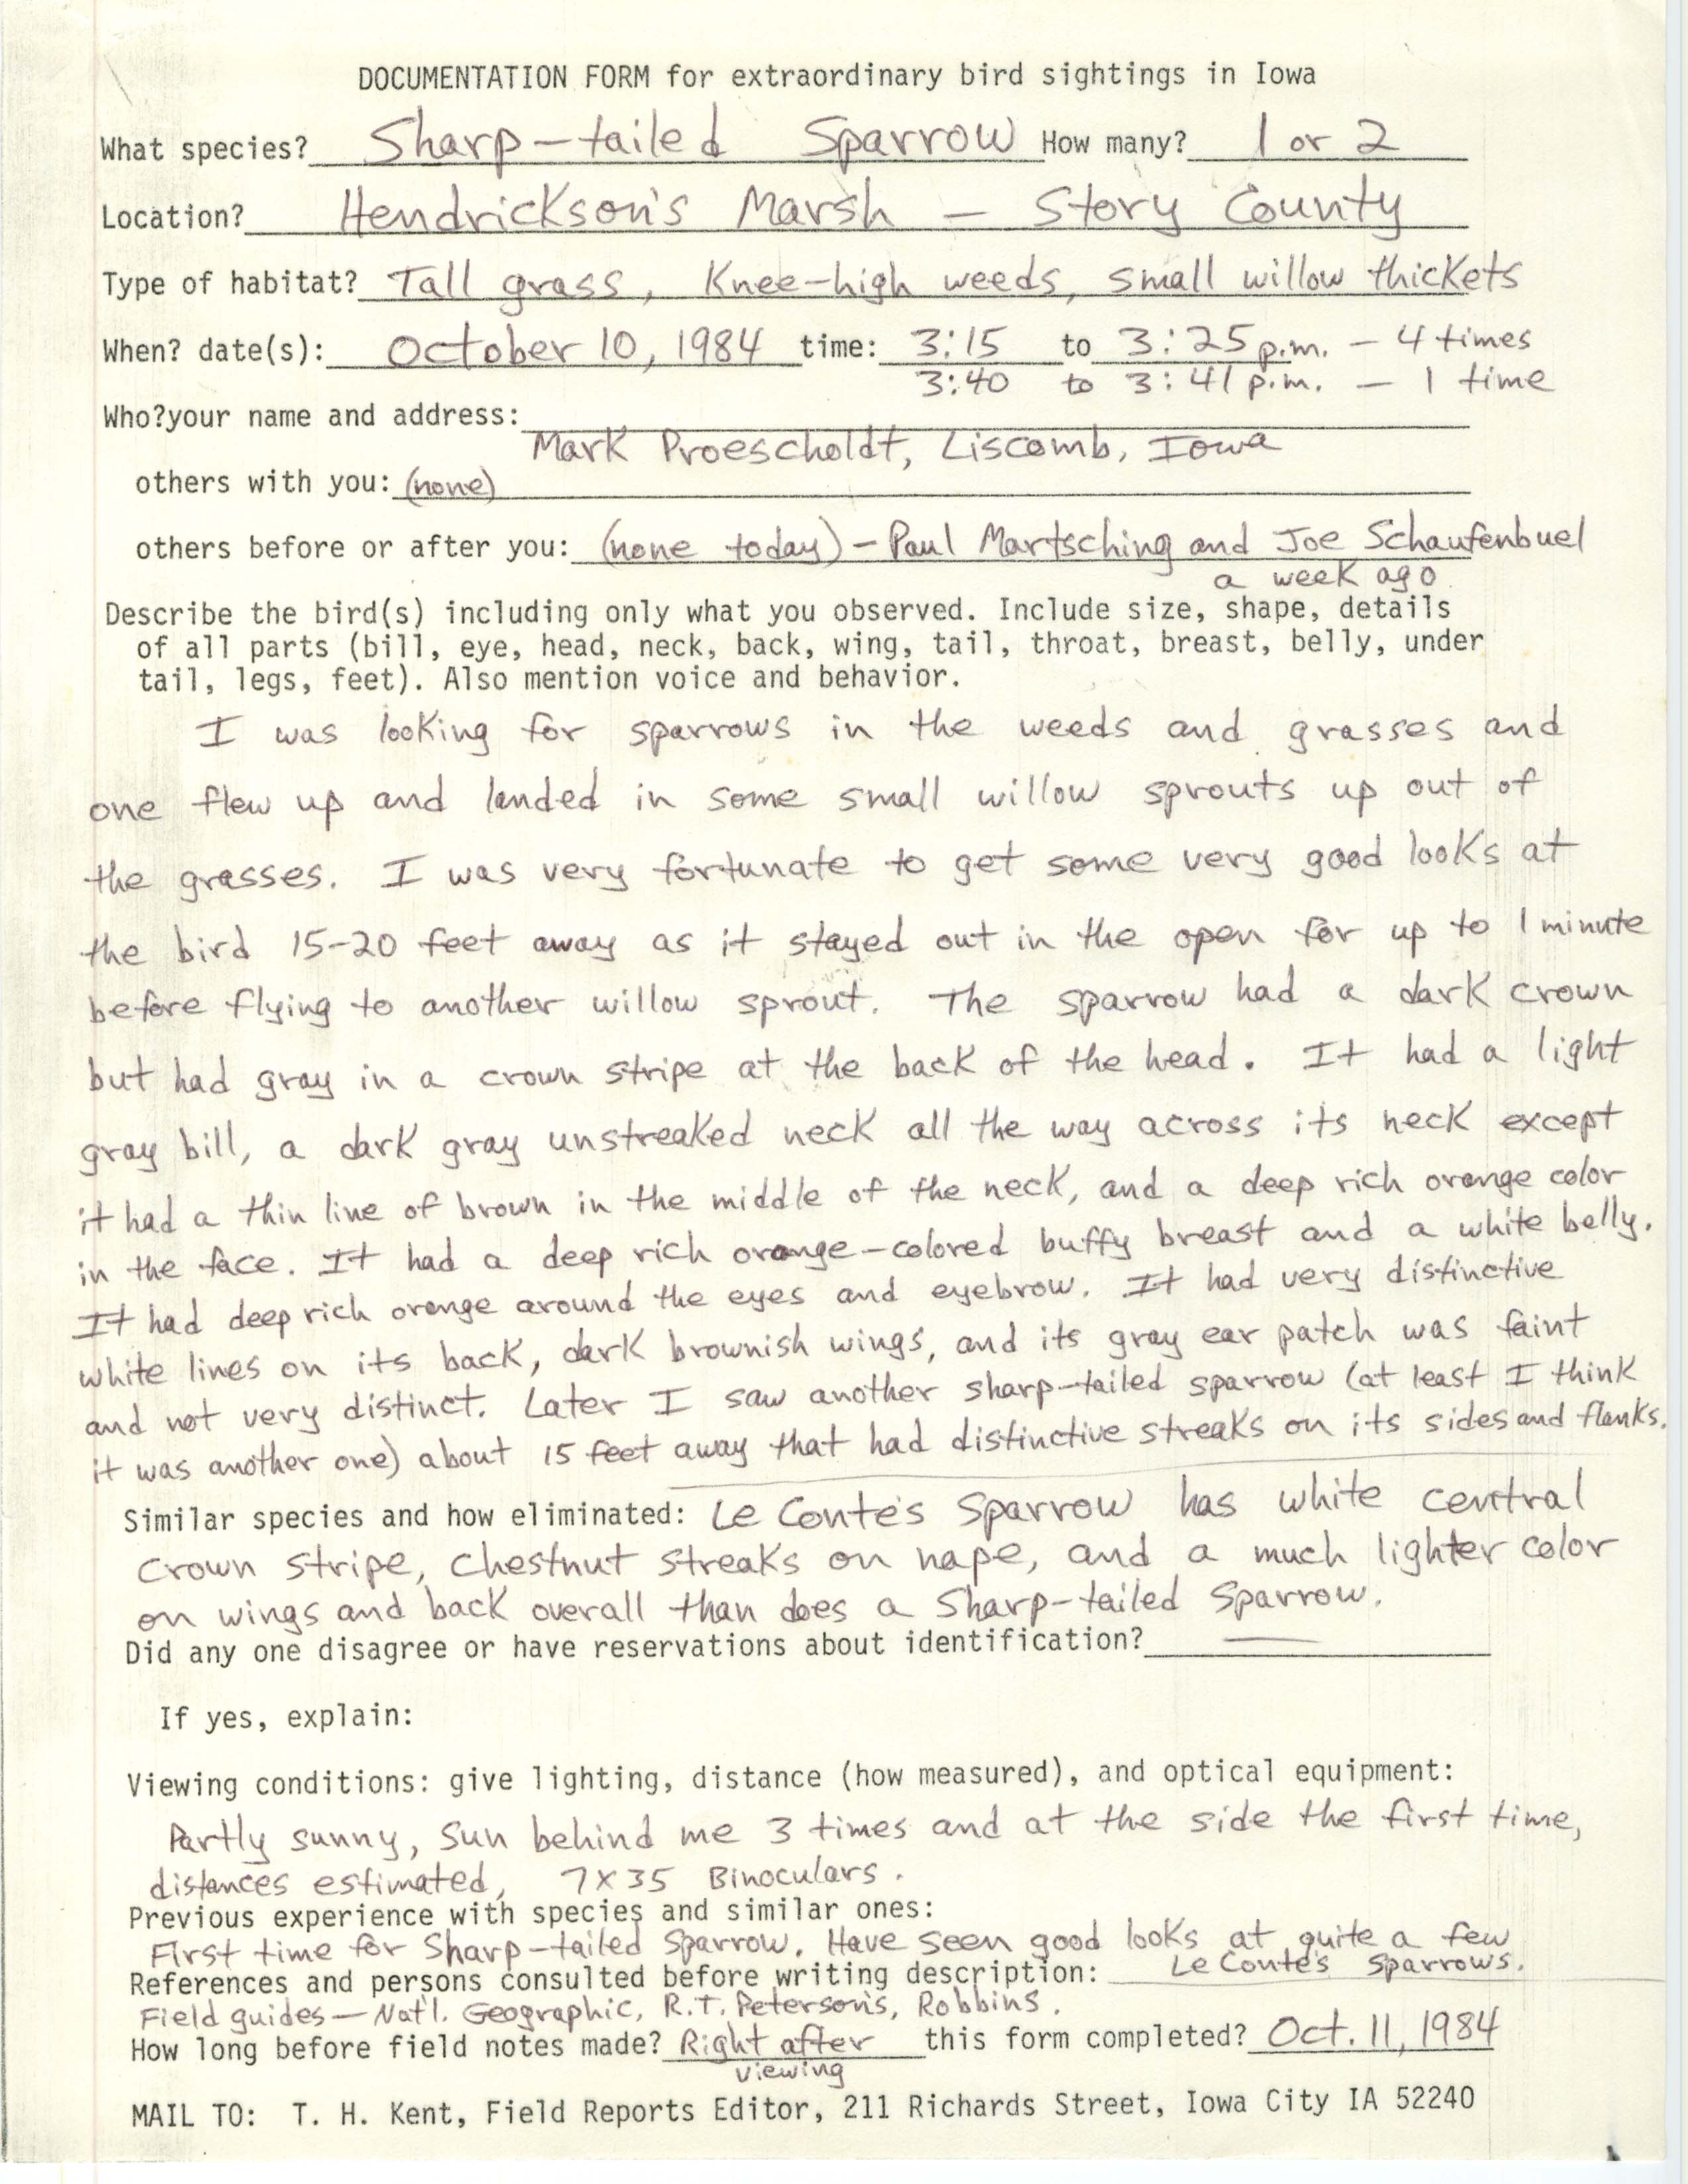 Rare bird documentation form for Sharp-tailed Sparrow at Hendrickson Marsh, 1984